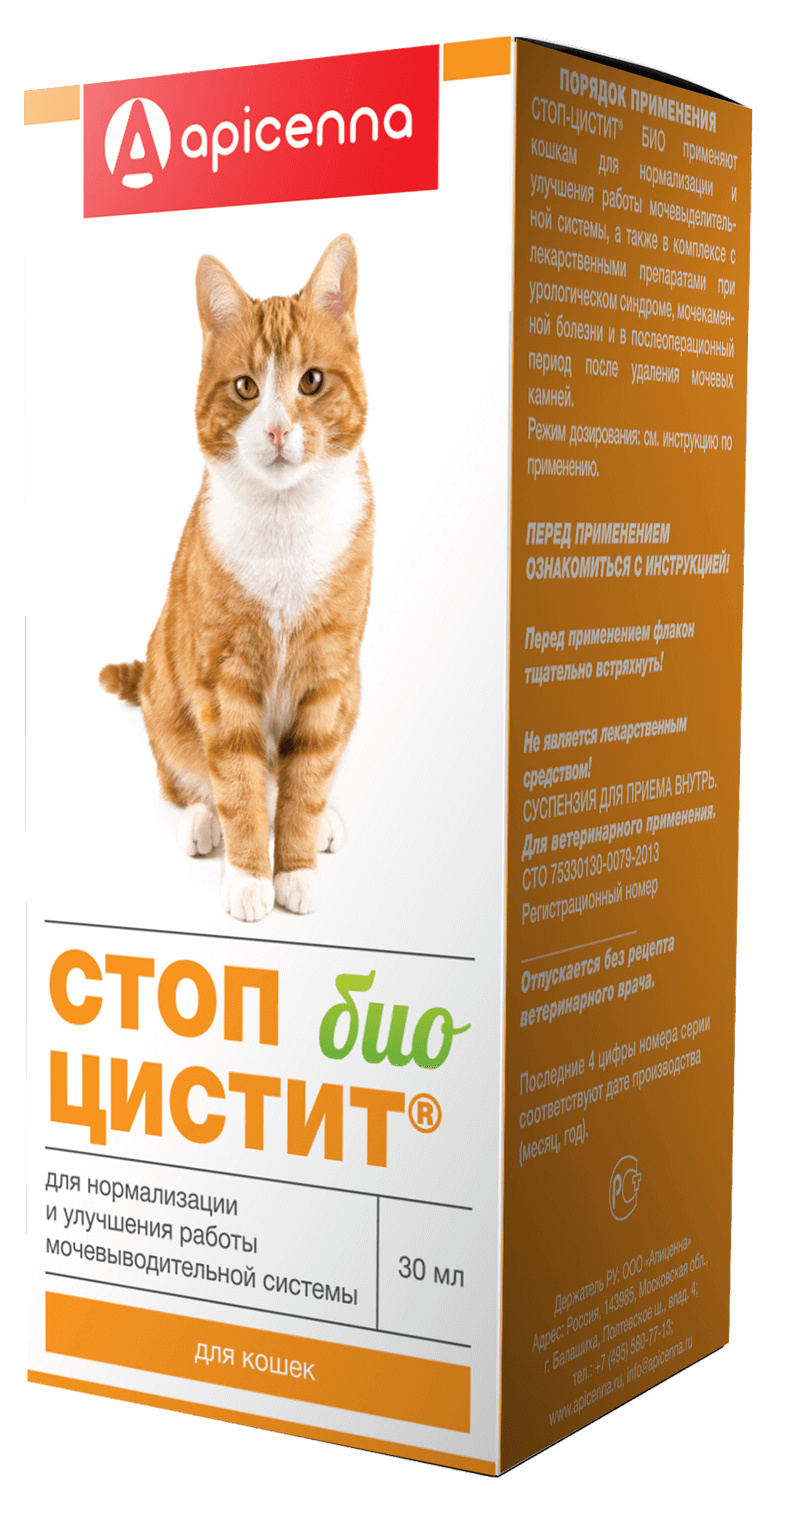 Apicenna Apicenna стоп цистит БИО для кошек: лечение и профилактика МКБ (суспензия) (30 г)